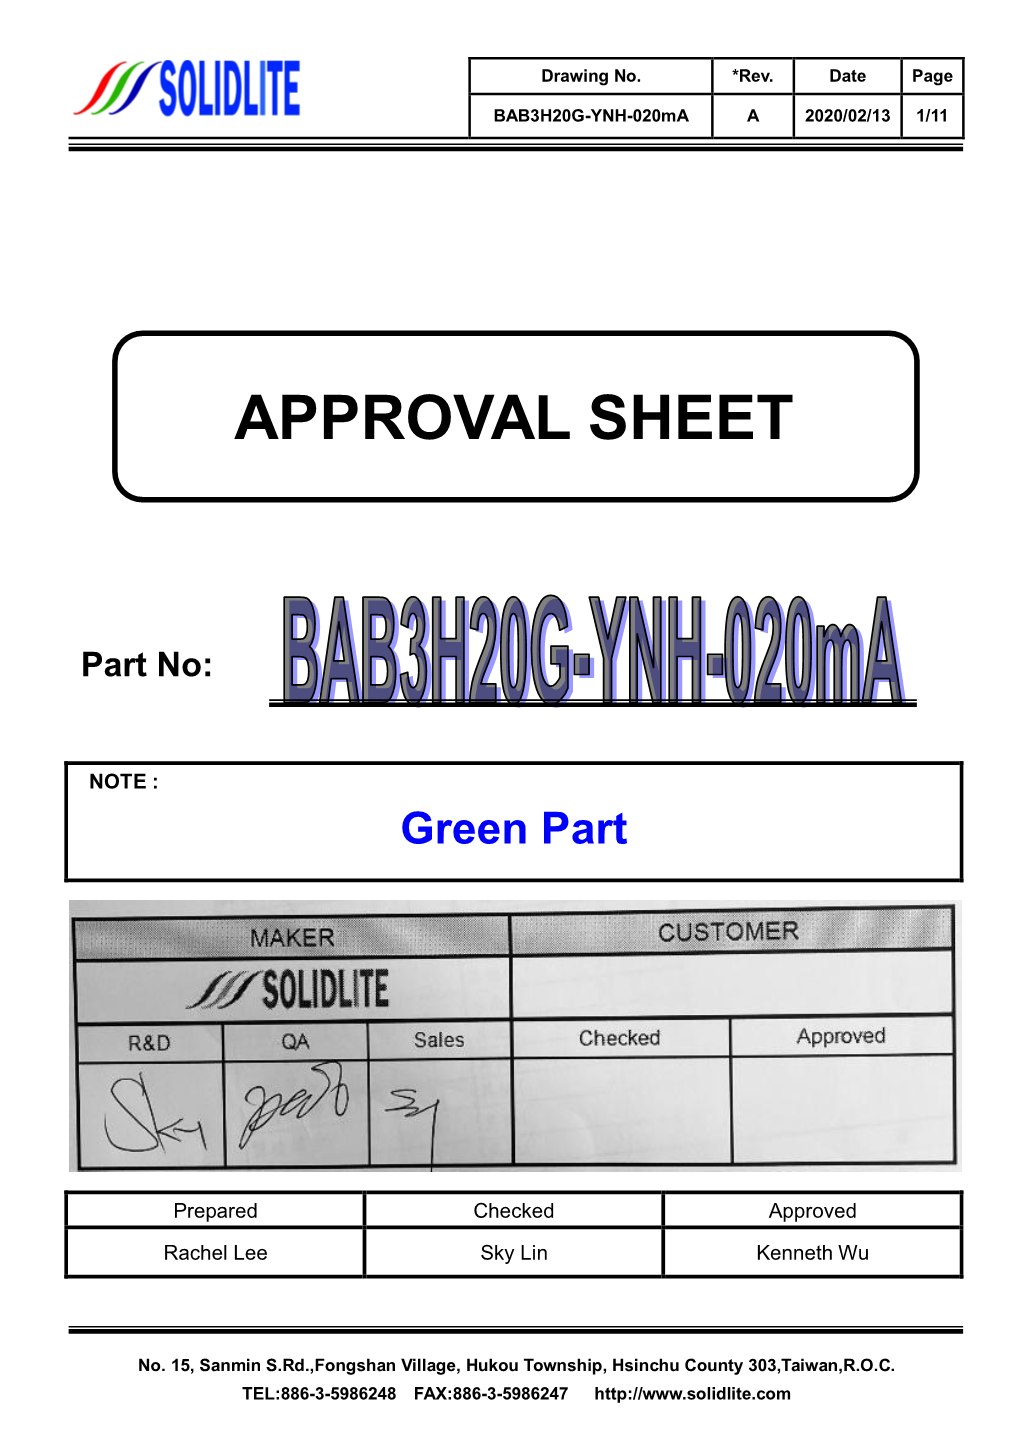 Approval Sheet